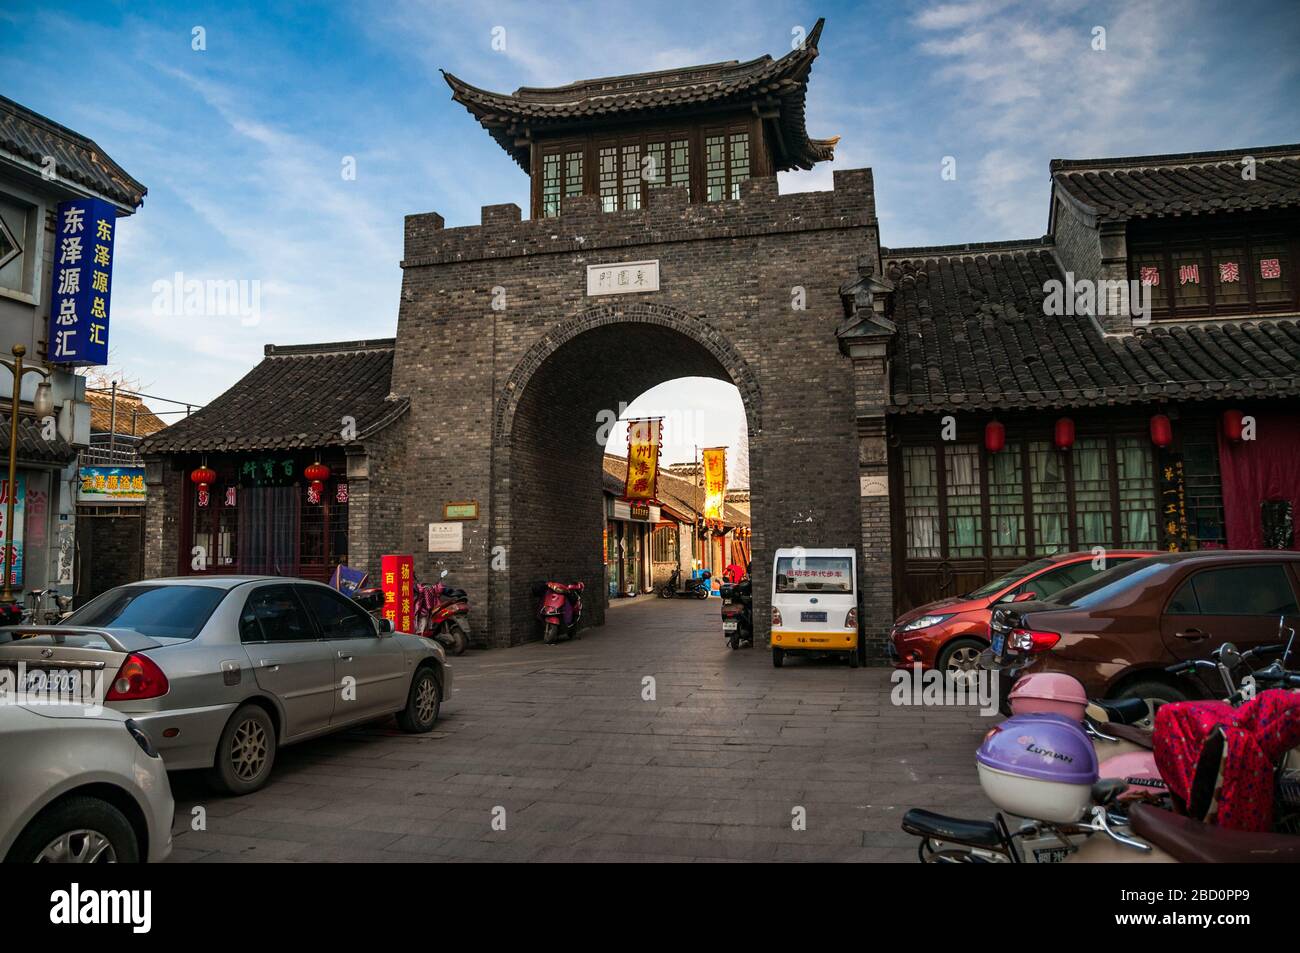 The Dongquan Gate into the old town part of Yangzhou, Jiangsu Province, China Stock Photo